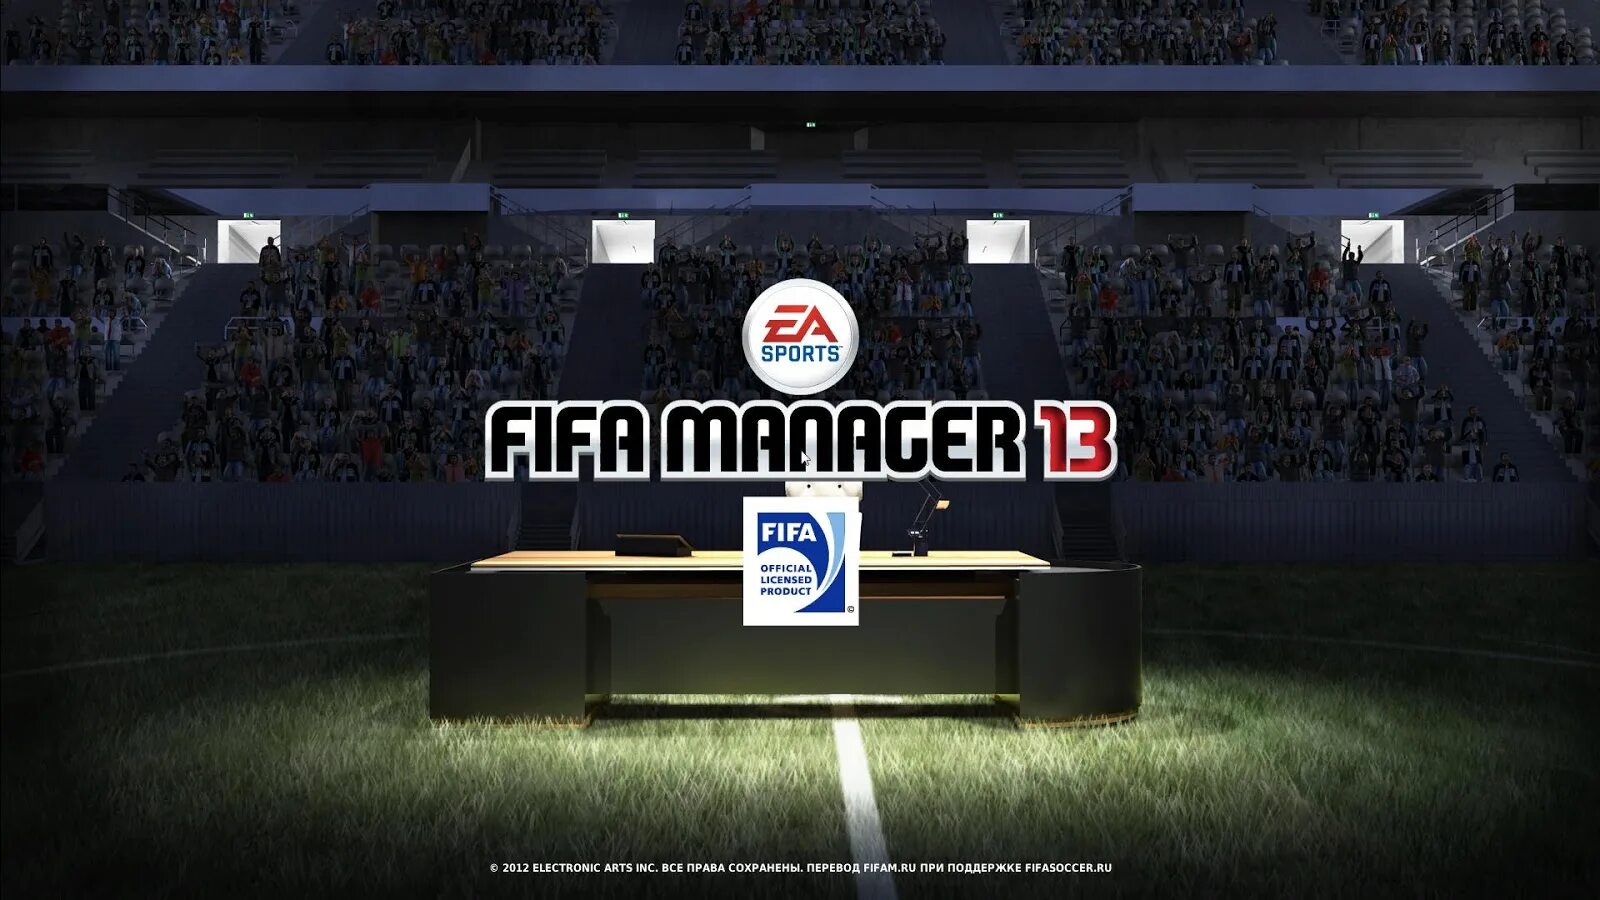 Fifa manager 13. ФИФА менеджер 13. ФИФА менеджер 14. FIFA Manager 12. FIFA Manager 2013 логотипы.